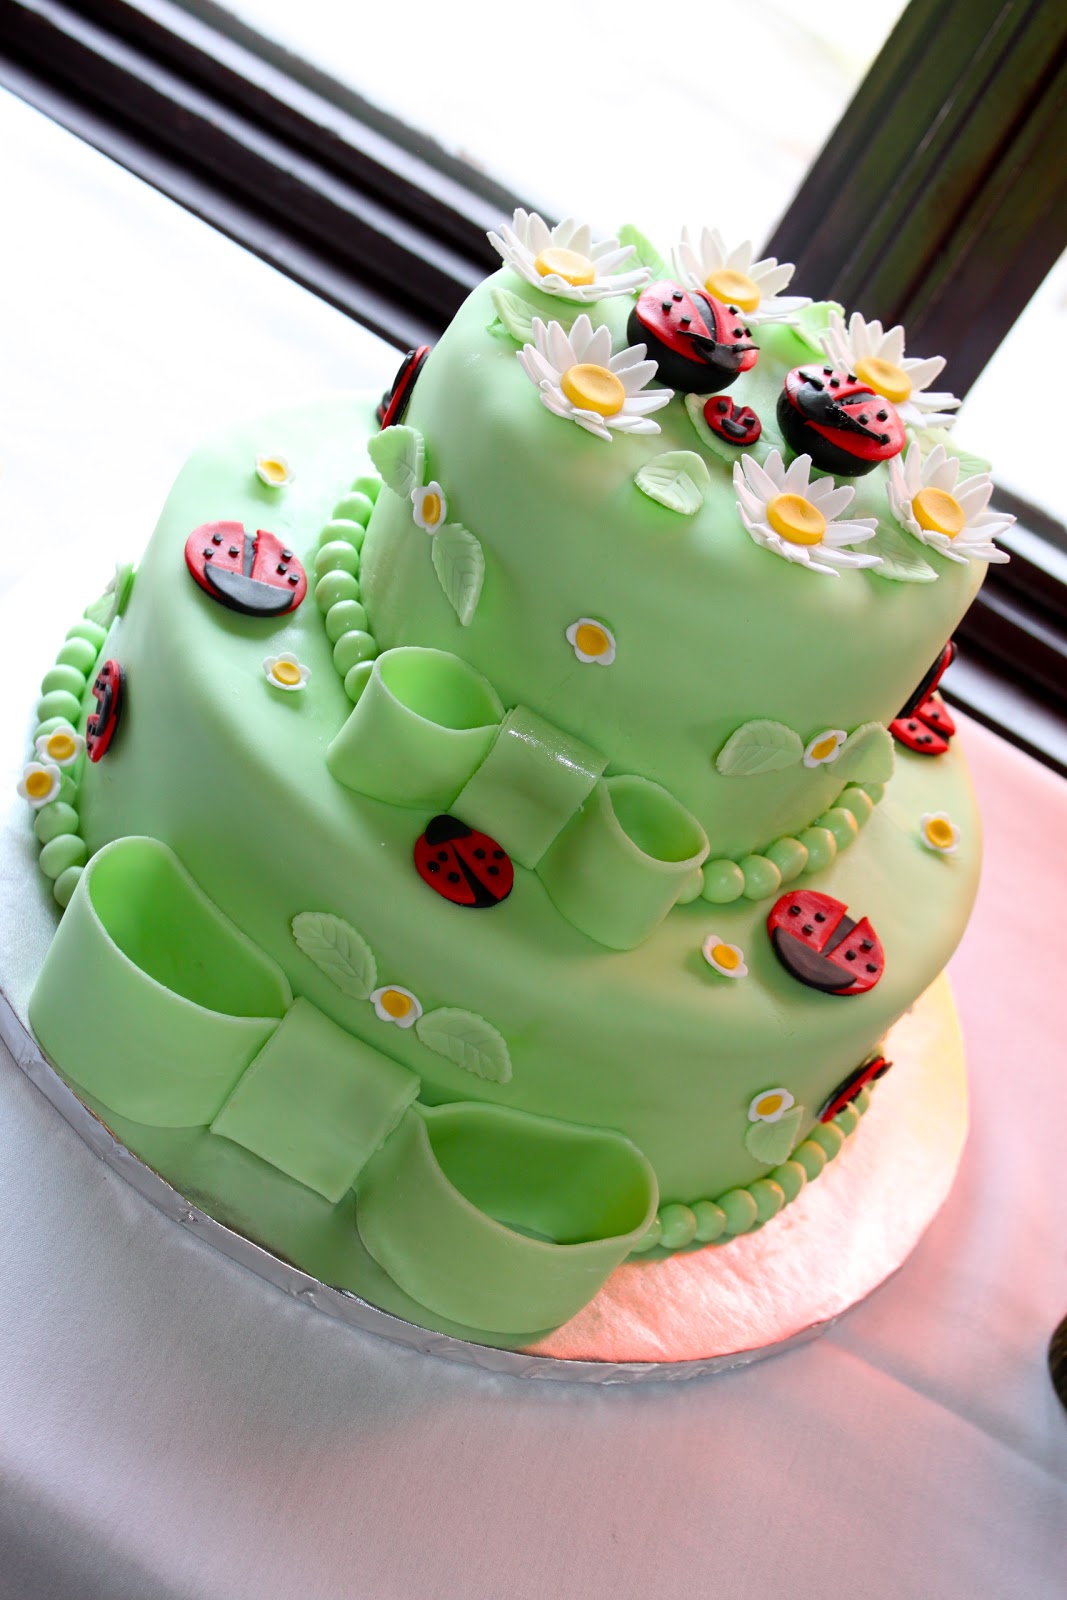 white chocolate cake decorations Lady Bug Fondant Cake with White Vanilla Cake and Chocolate Cake and 